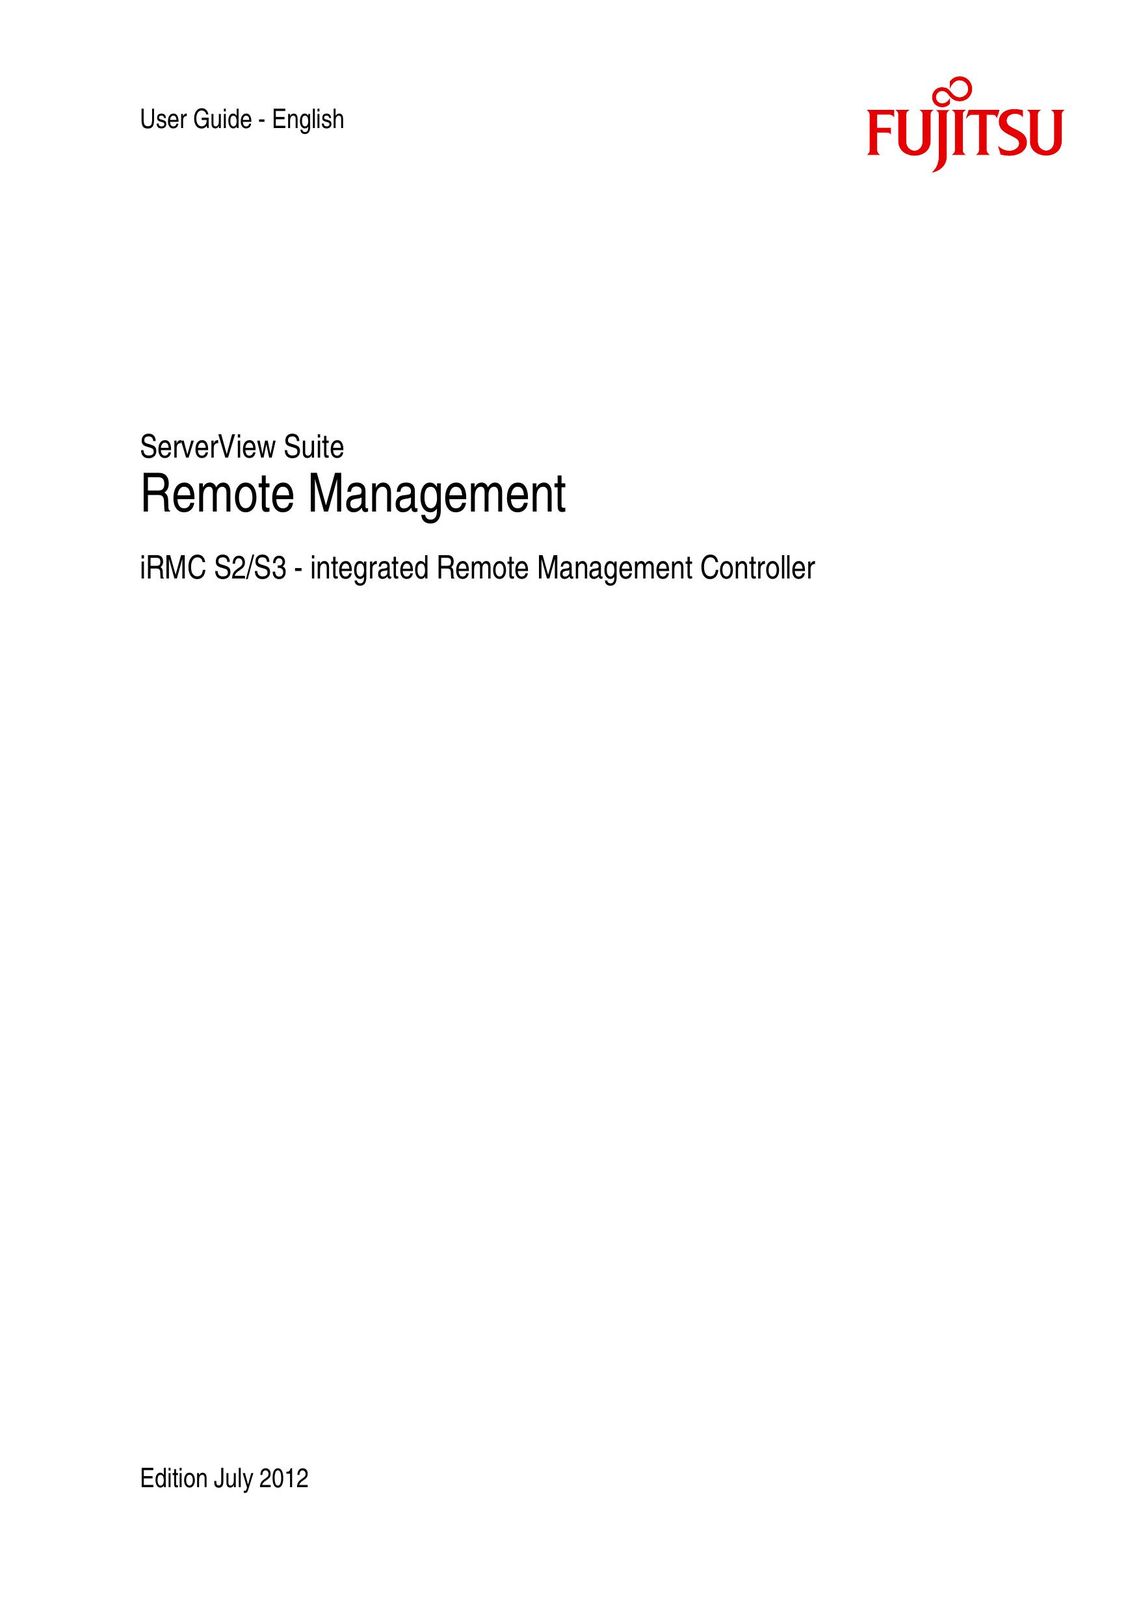 Fujitsu IRMC S2/S3 Universal Remote User Manual